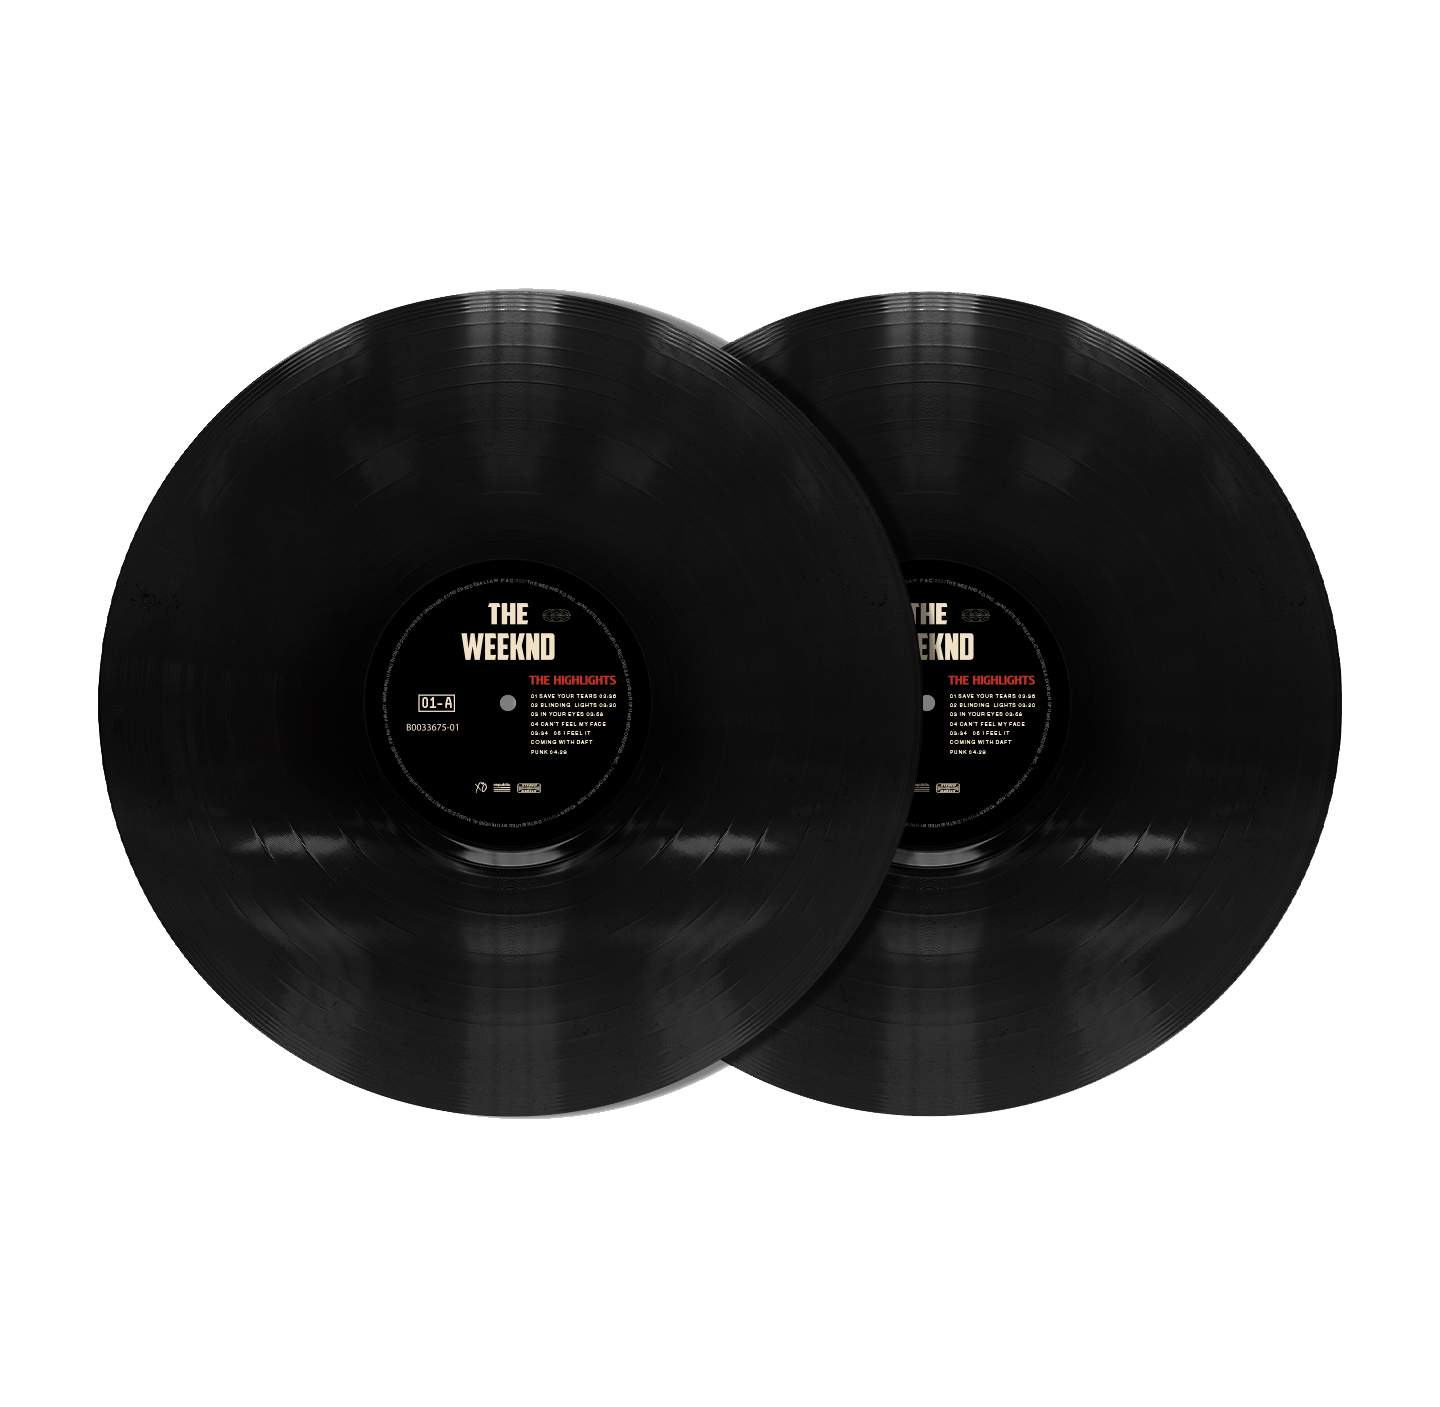 The Highlights Vinyl Discs